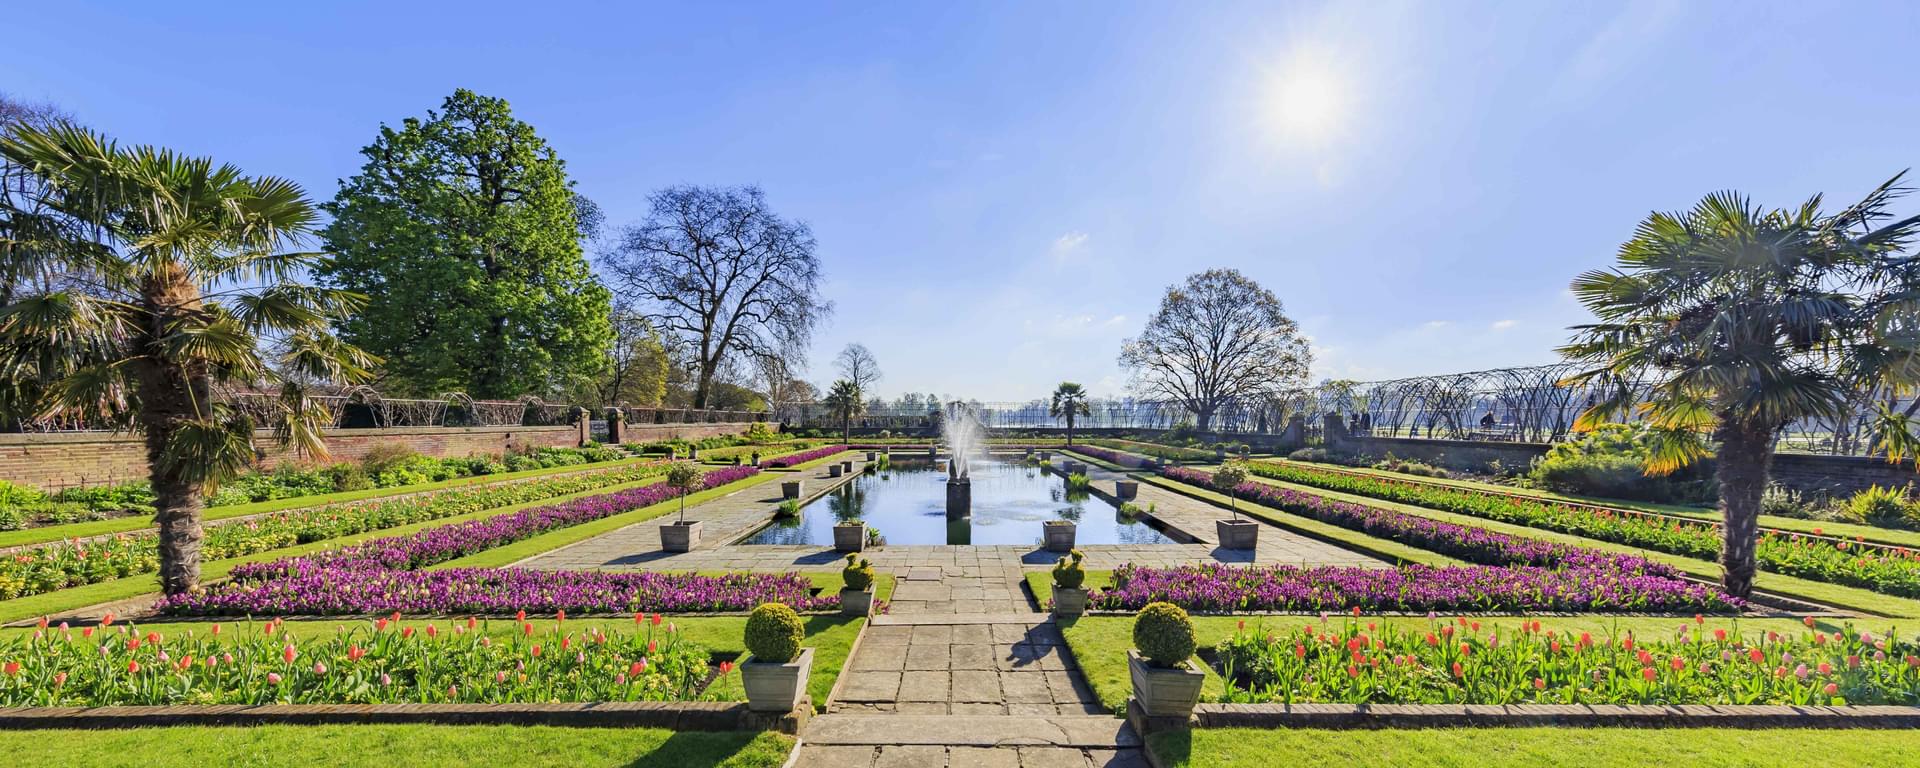 Landscaped gardens in Hyde Park, London